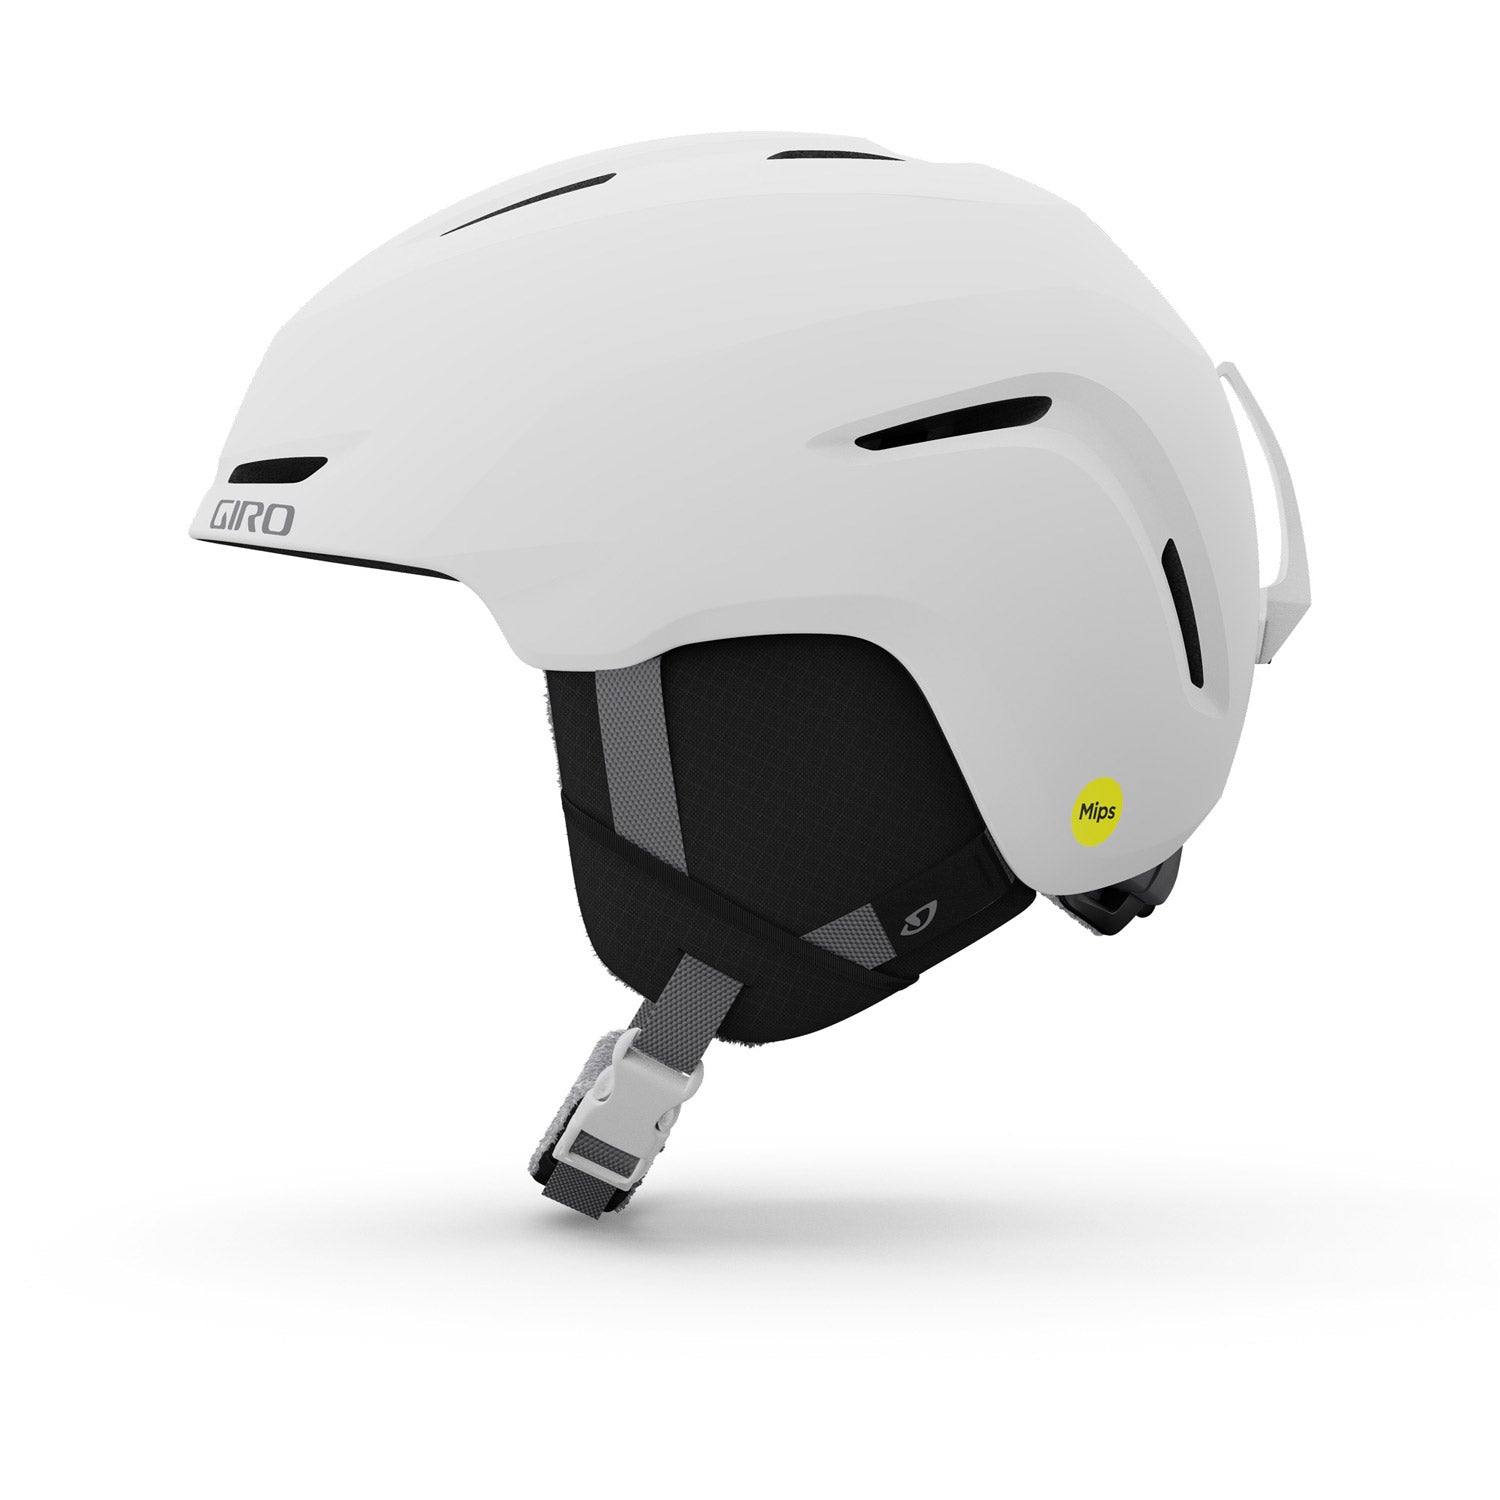 Sario MIPS Snow Helmet